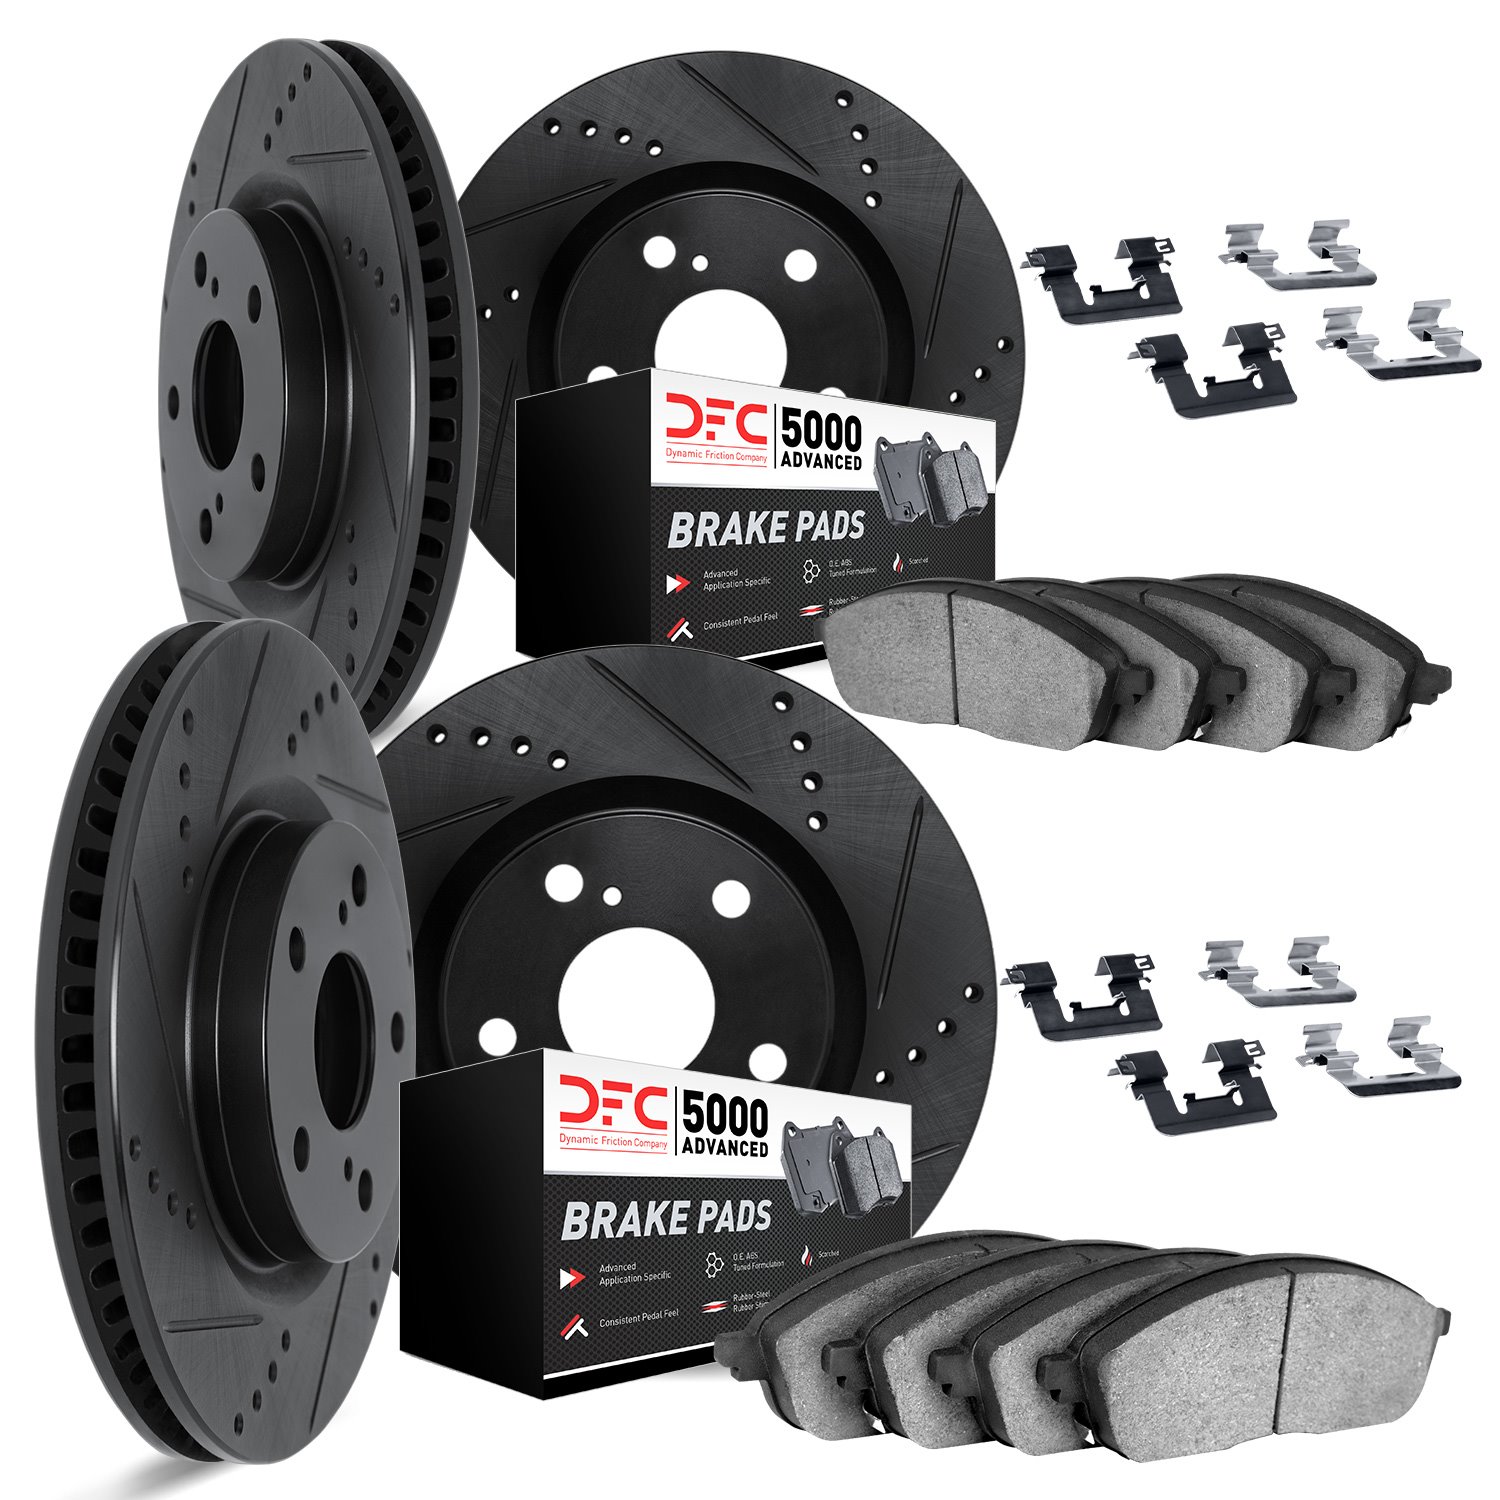 8514-02029 Drilled/Slotted Brake Rotors w/5000 Advanced Brake Pads Kit & Hardware [Black], 2014-2019 Porsche, Position: Front an